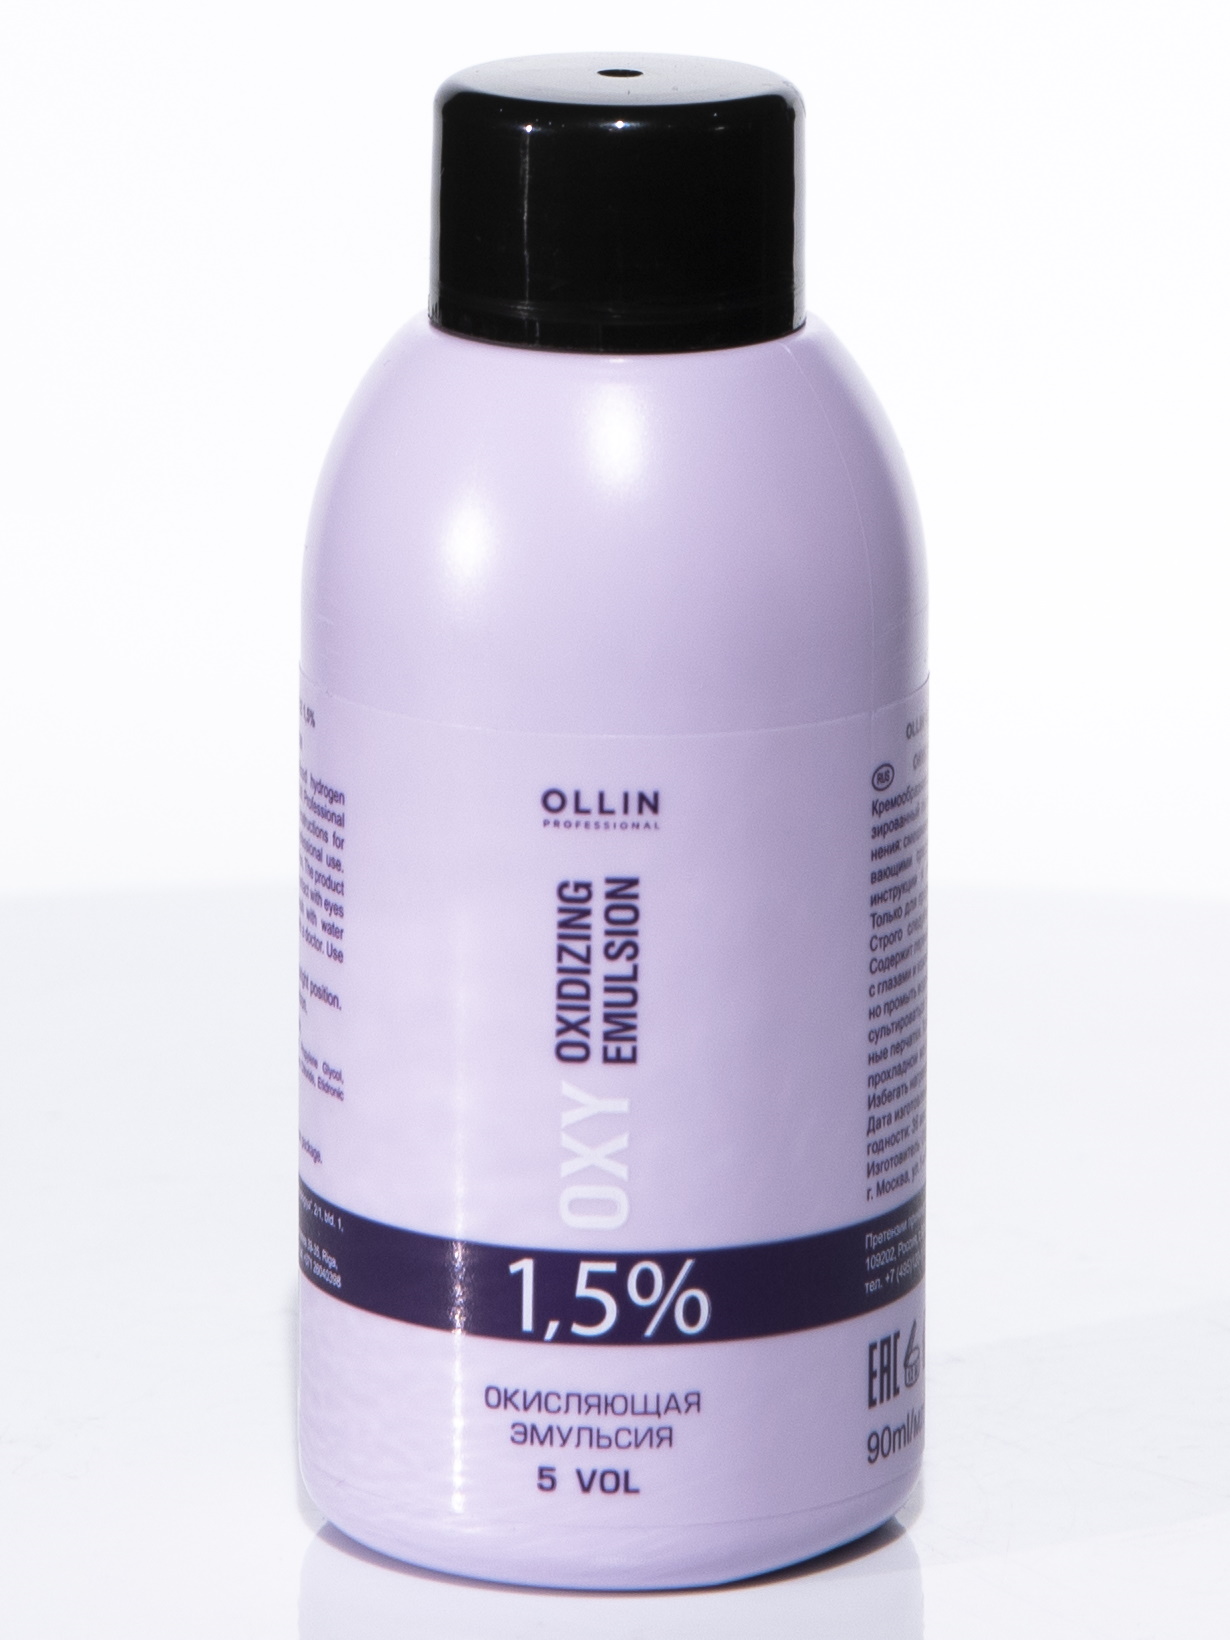 Купить Проявитель Ollin Professional Oxy Oxidizing Emulsion 1, 5% 90 мл